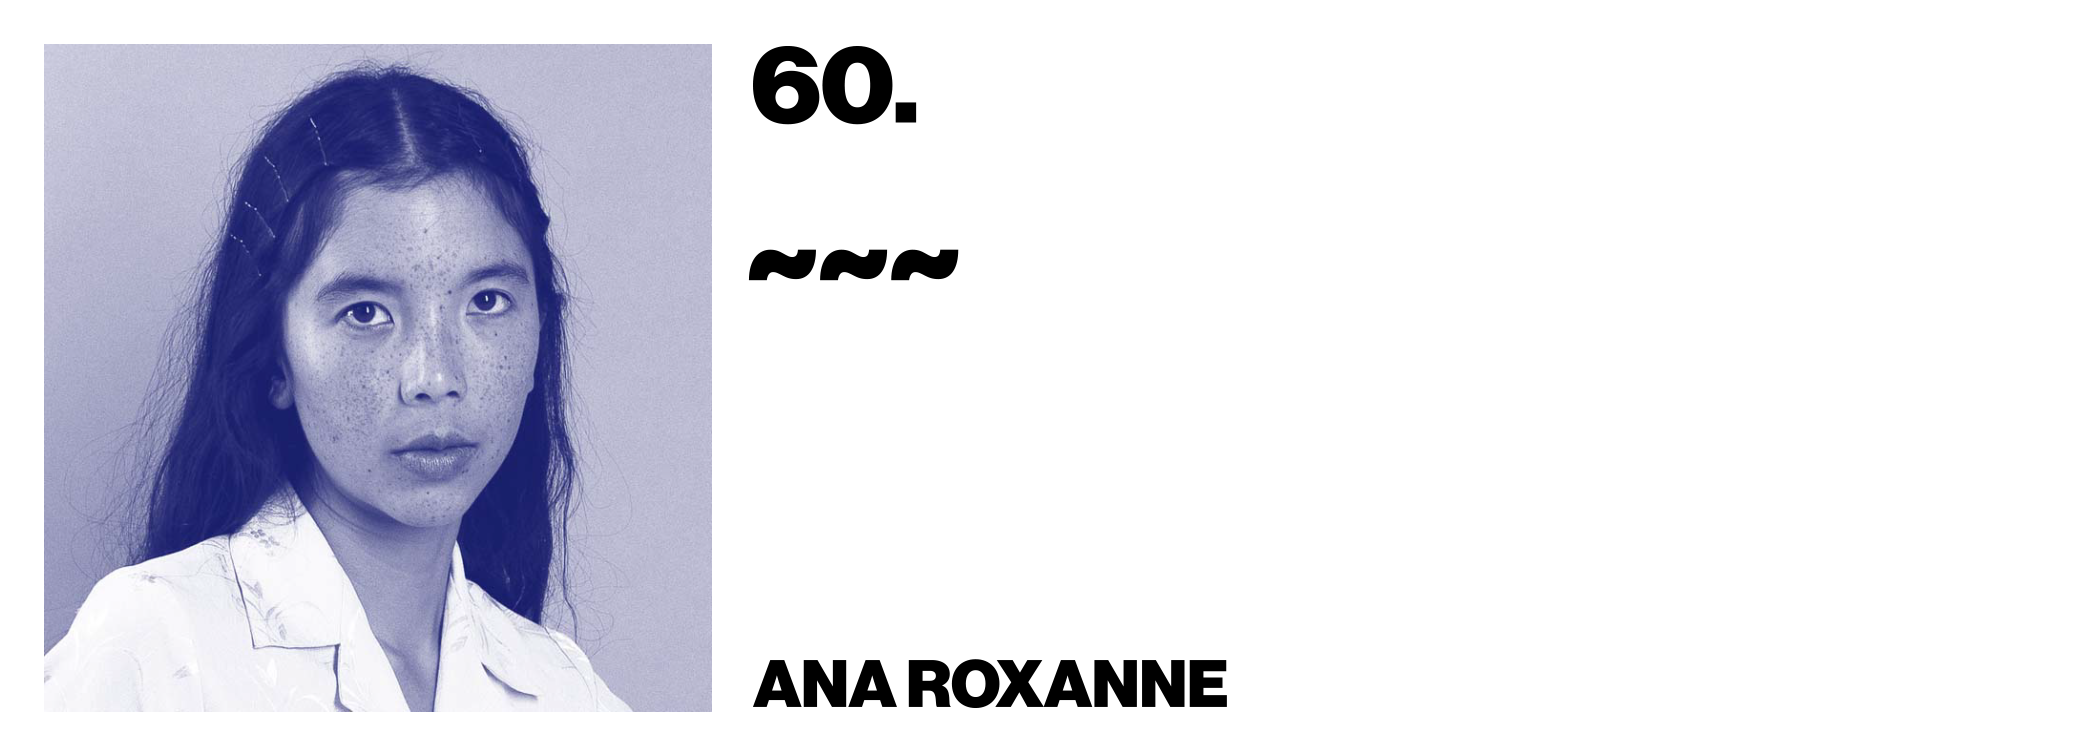 1575927974311-60-Ana-Roxanne-